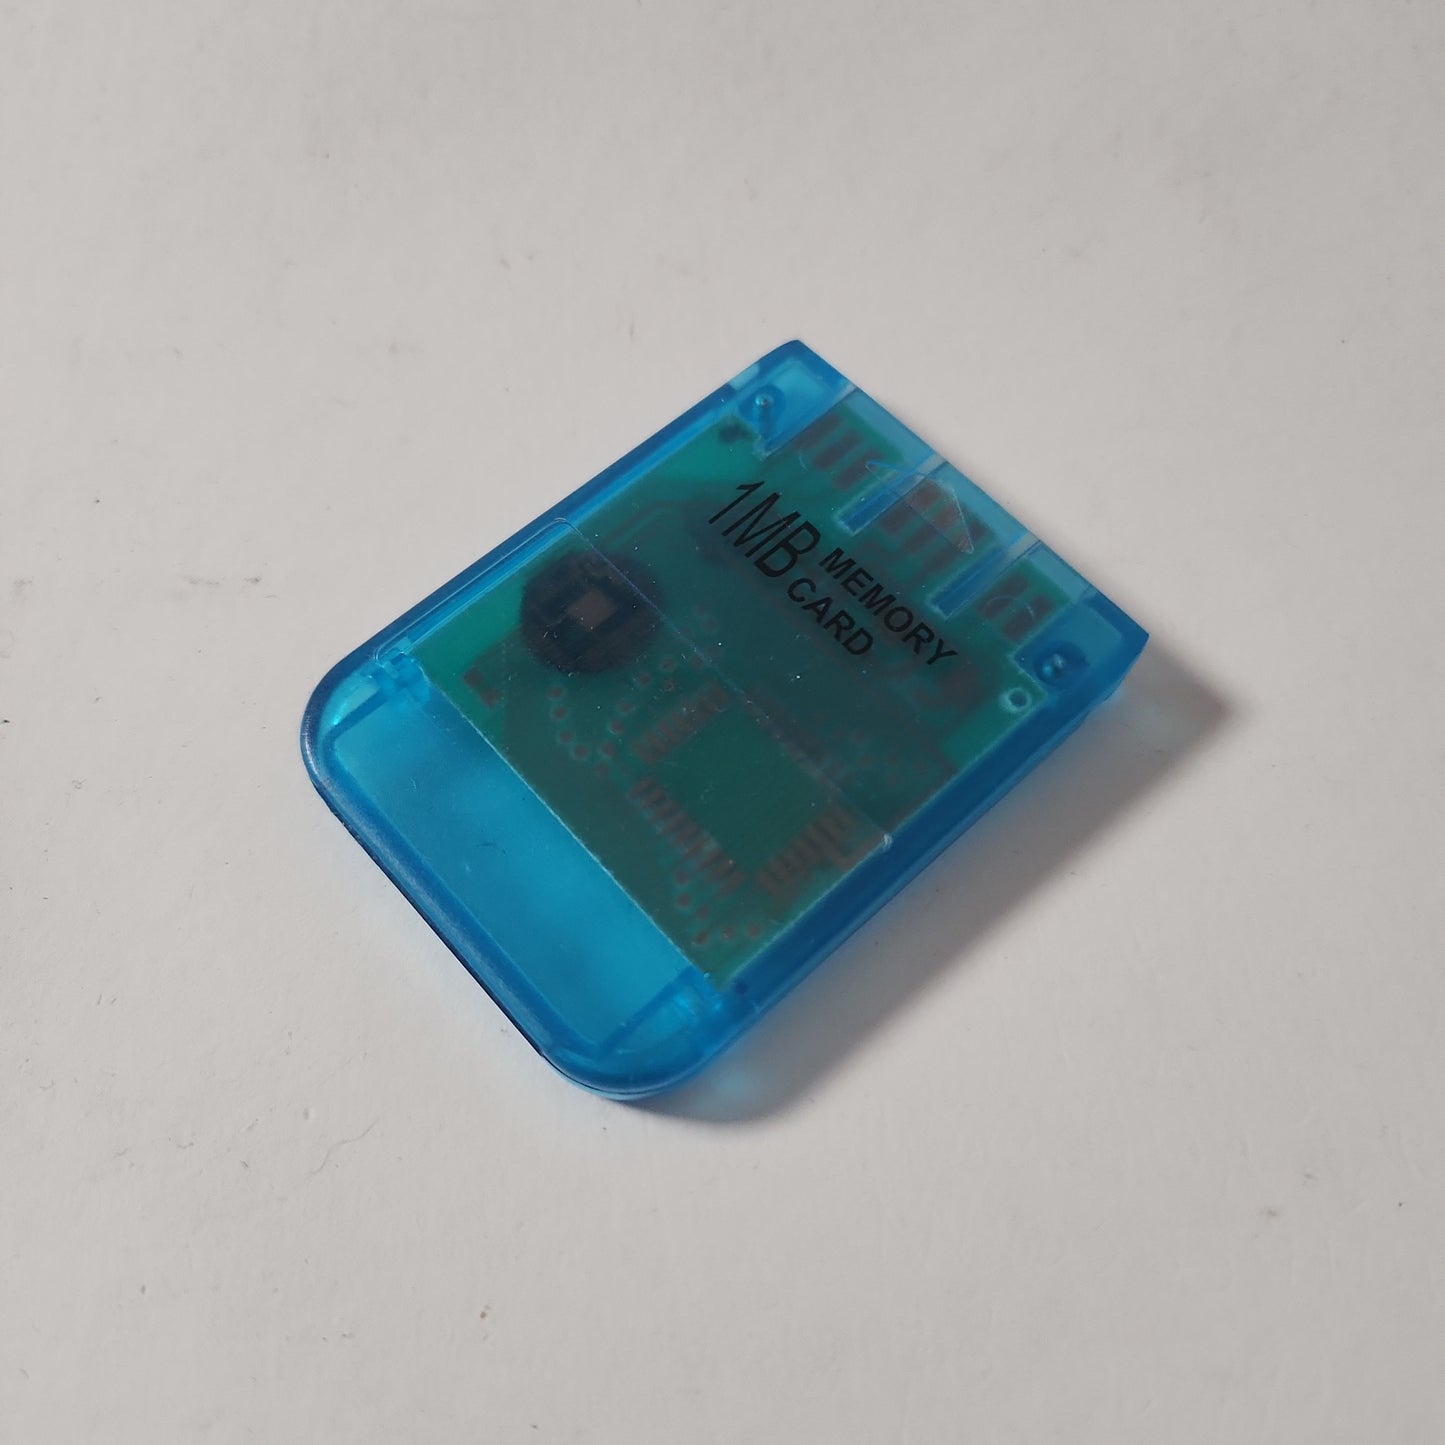 Transparant Blue 1MB Memorycard Playstation 1